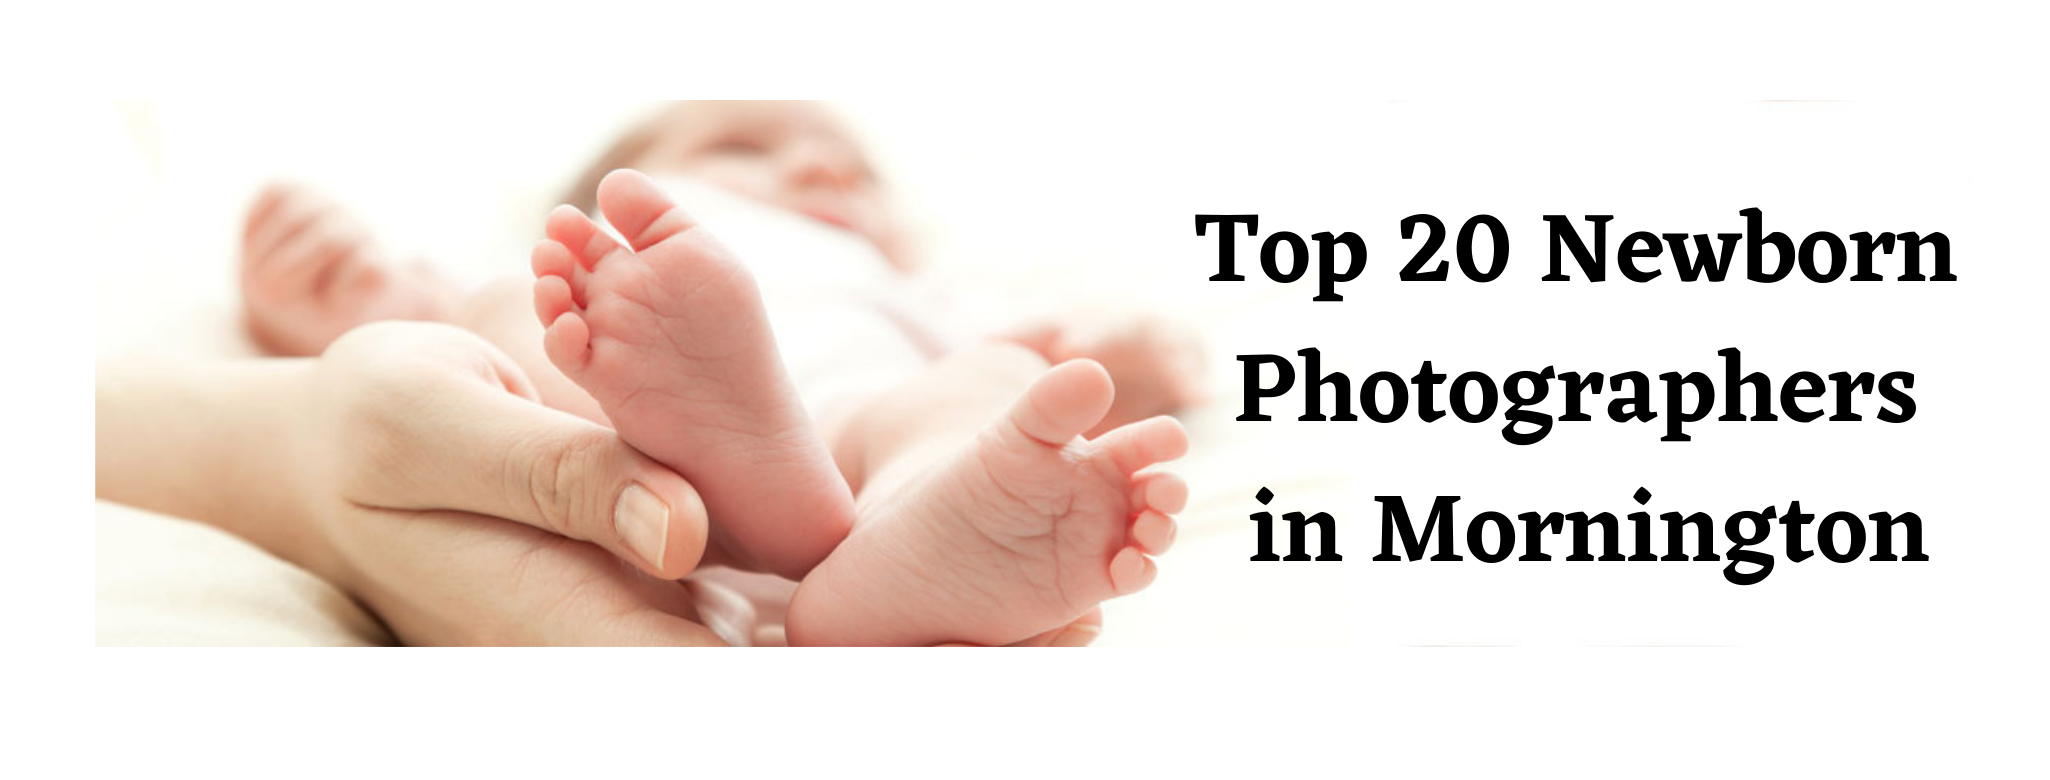 Top 20 Newborn Photographers in Mornington